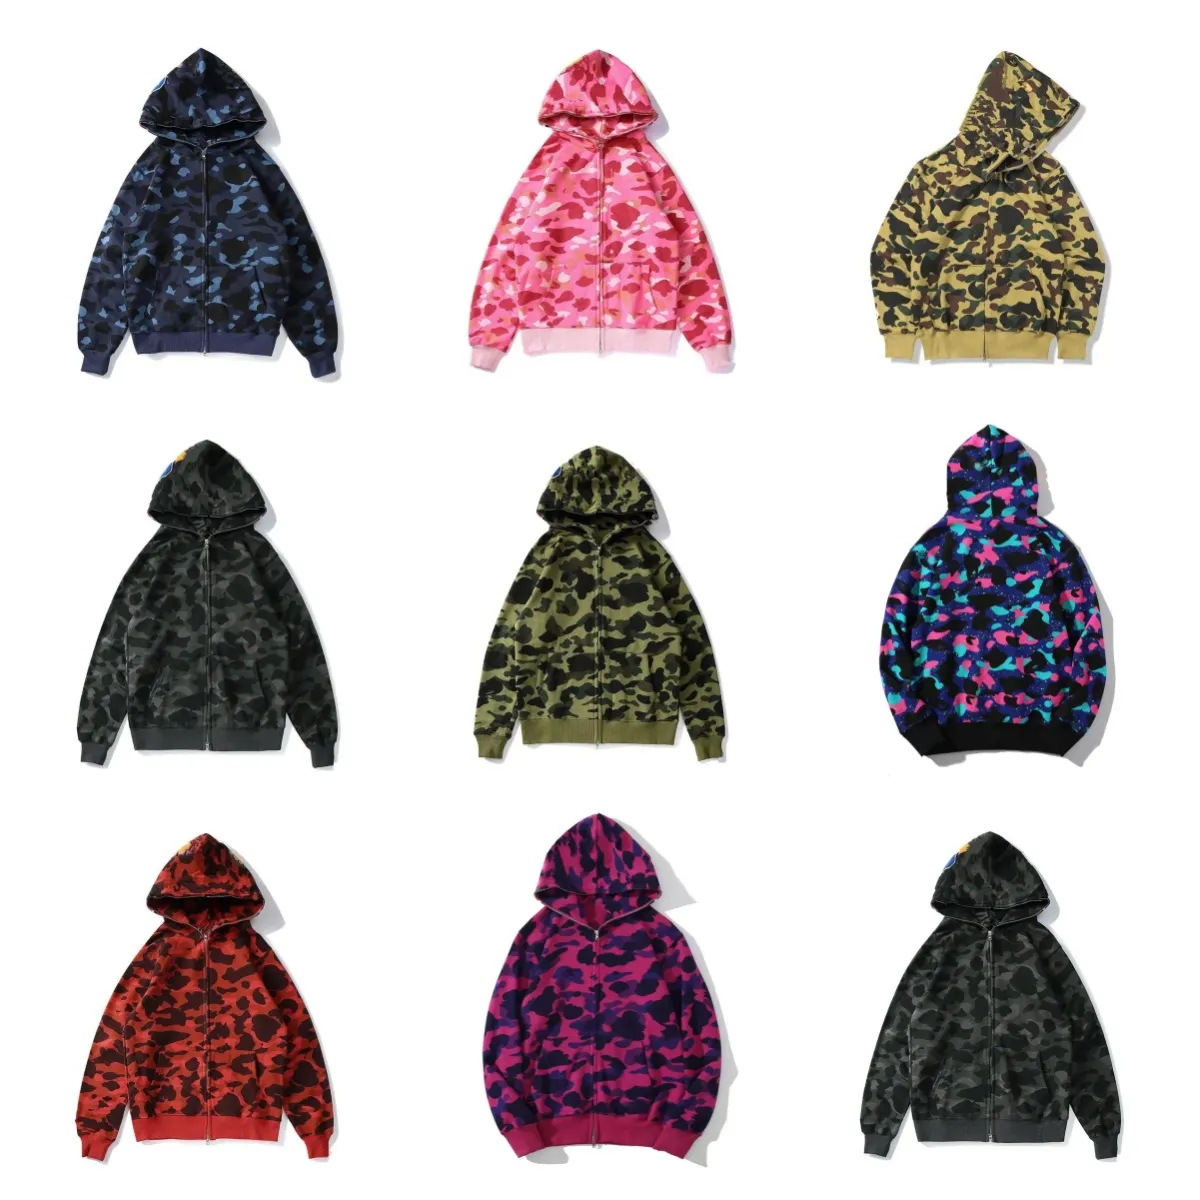 Mens hoodie women designer Full Zip Up Hoodies for Woman Black Camouflage Camouflage jacket Jogger Zipper Print Sweatshirts Womens Clothing high quality Jacket